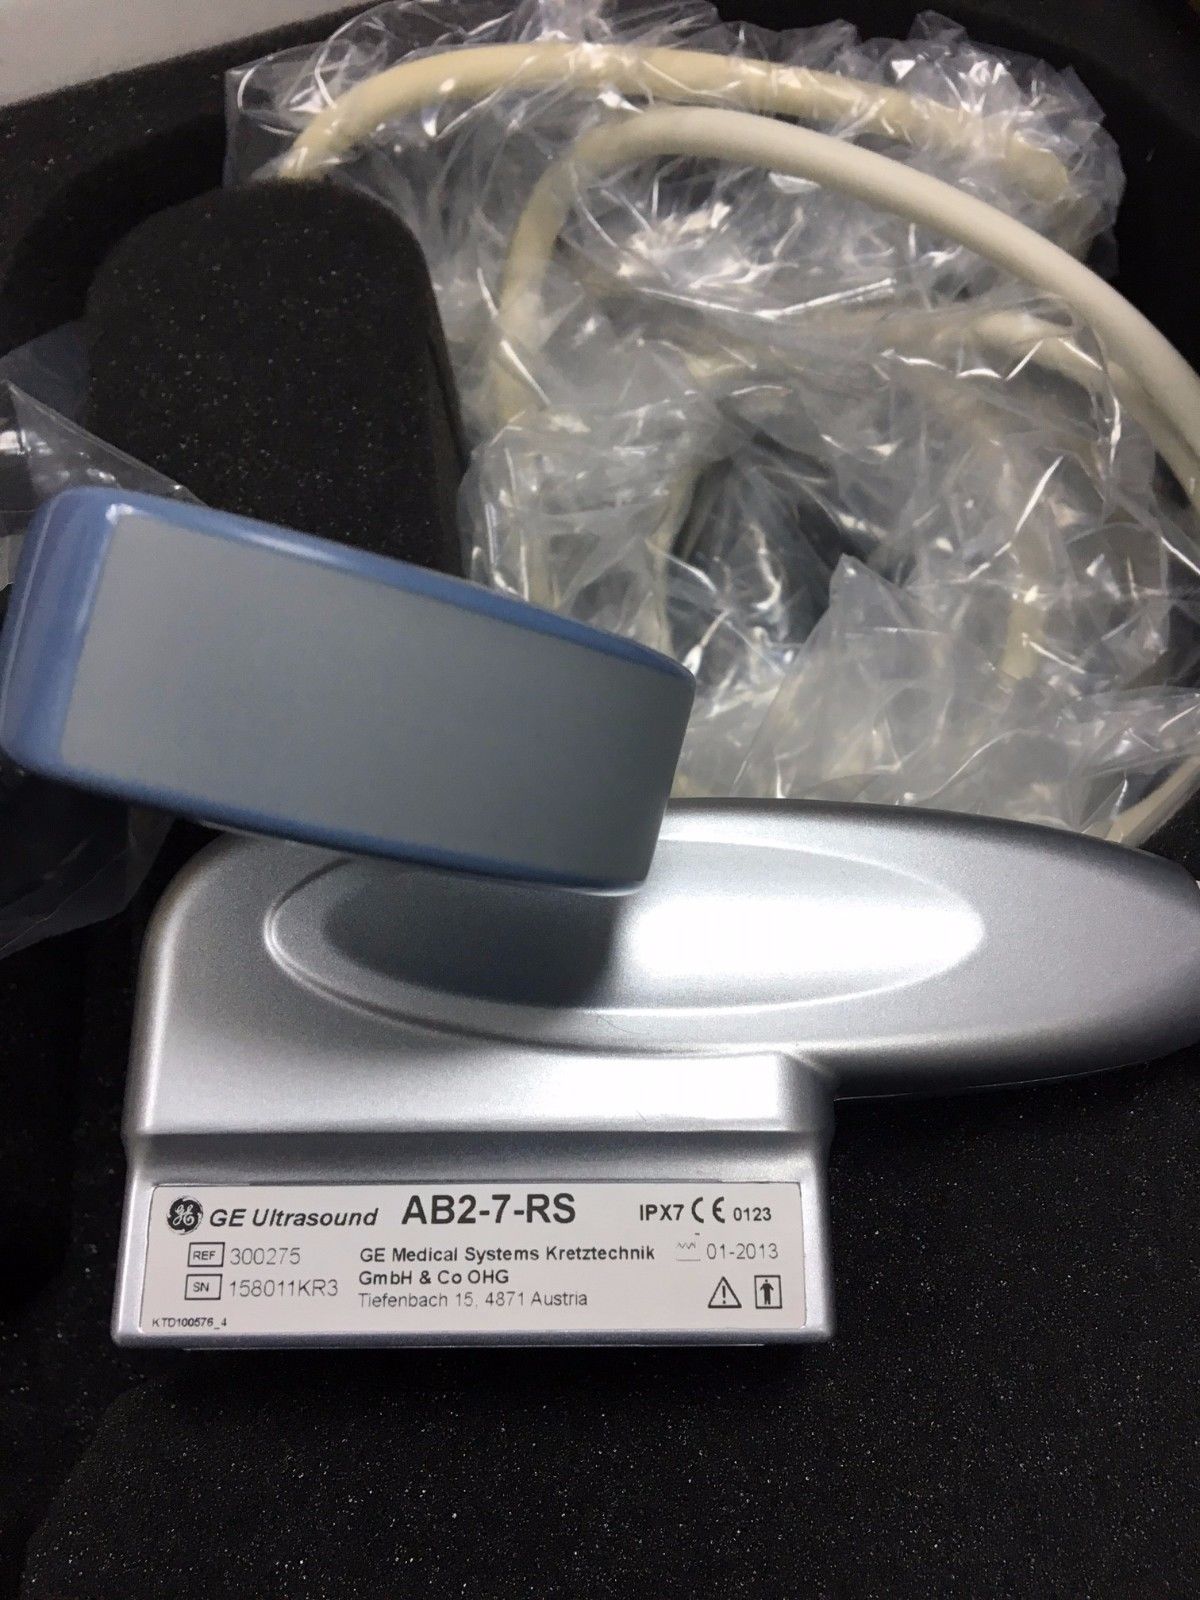 GE AB2-7-RS Ultrasound Transducer (Probe)